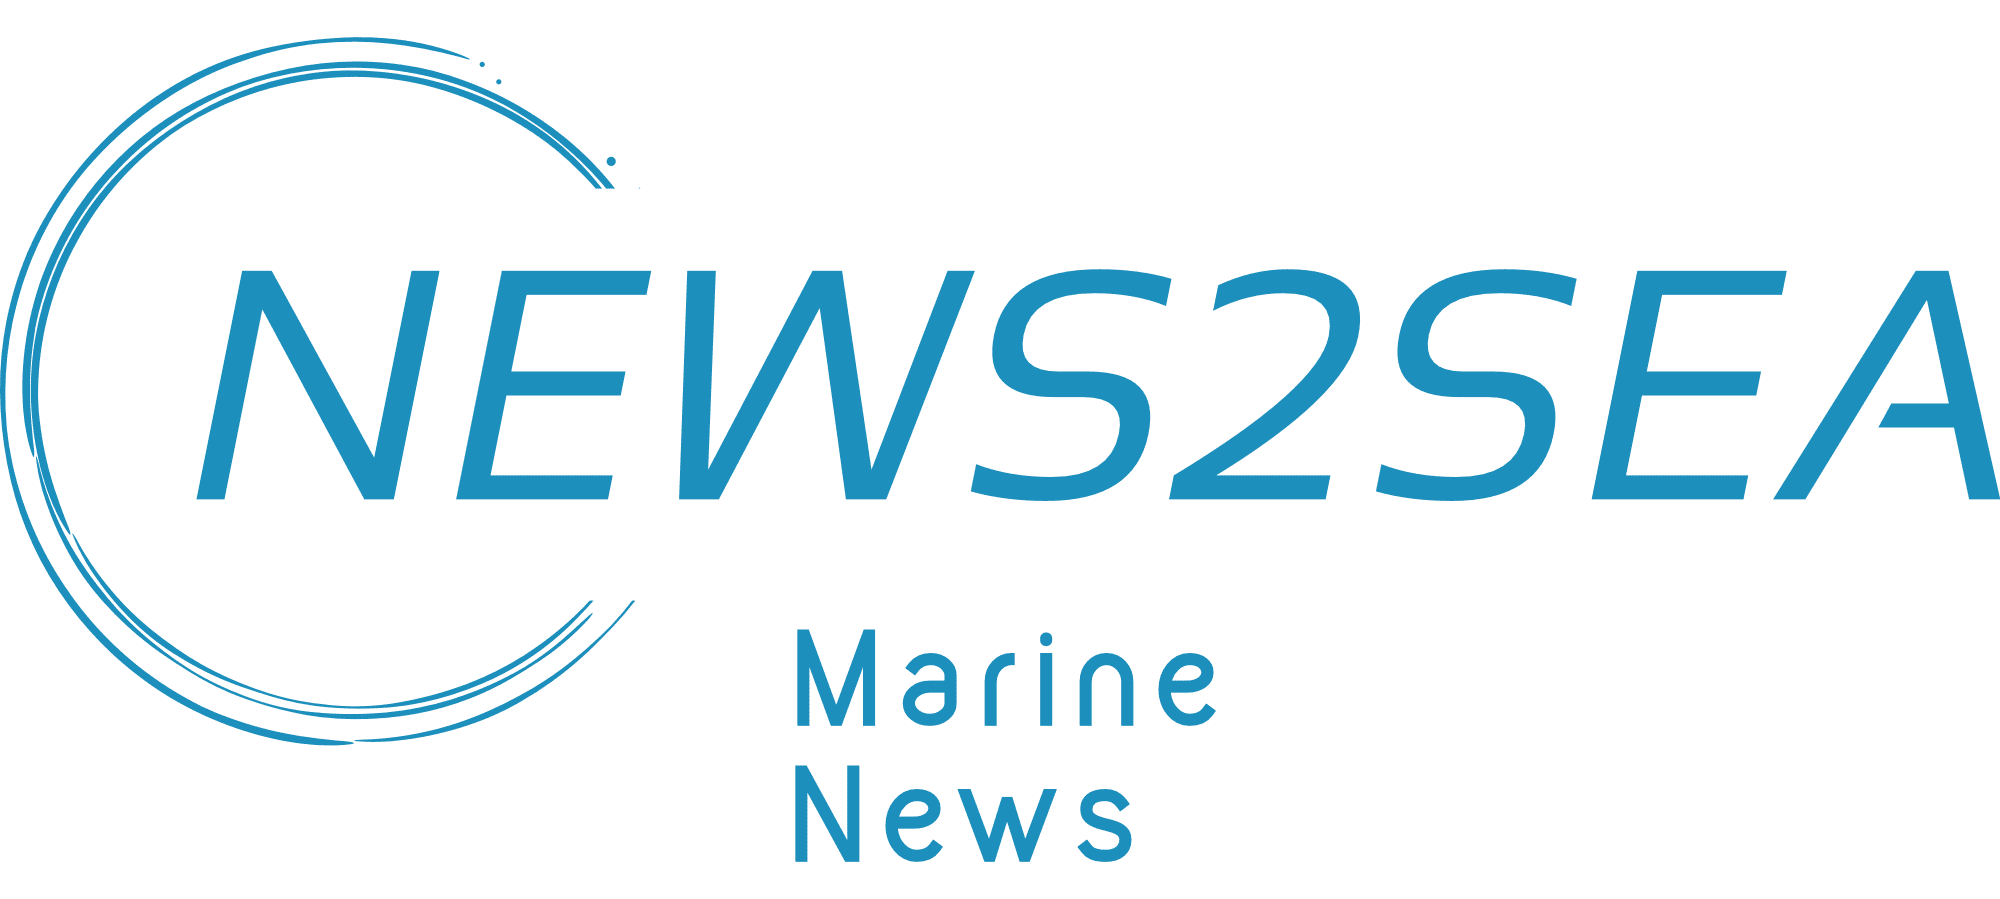 news2sea, cookie policy, global maritime news